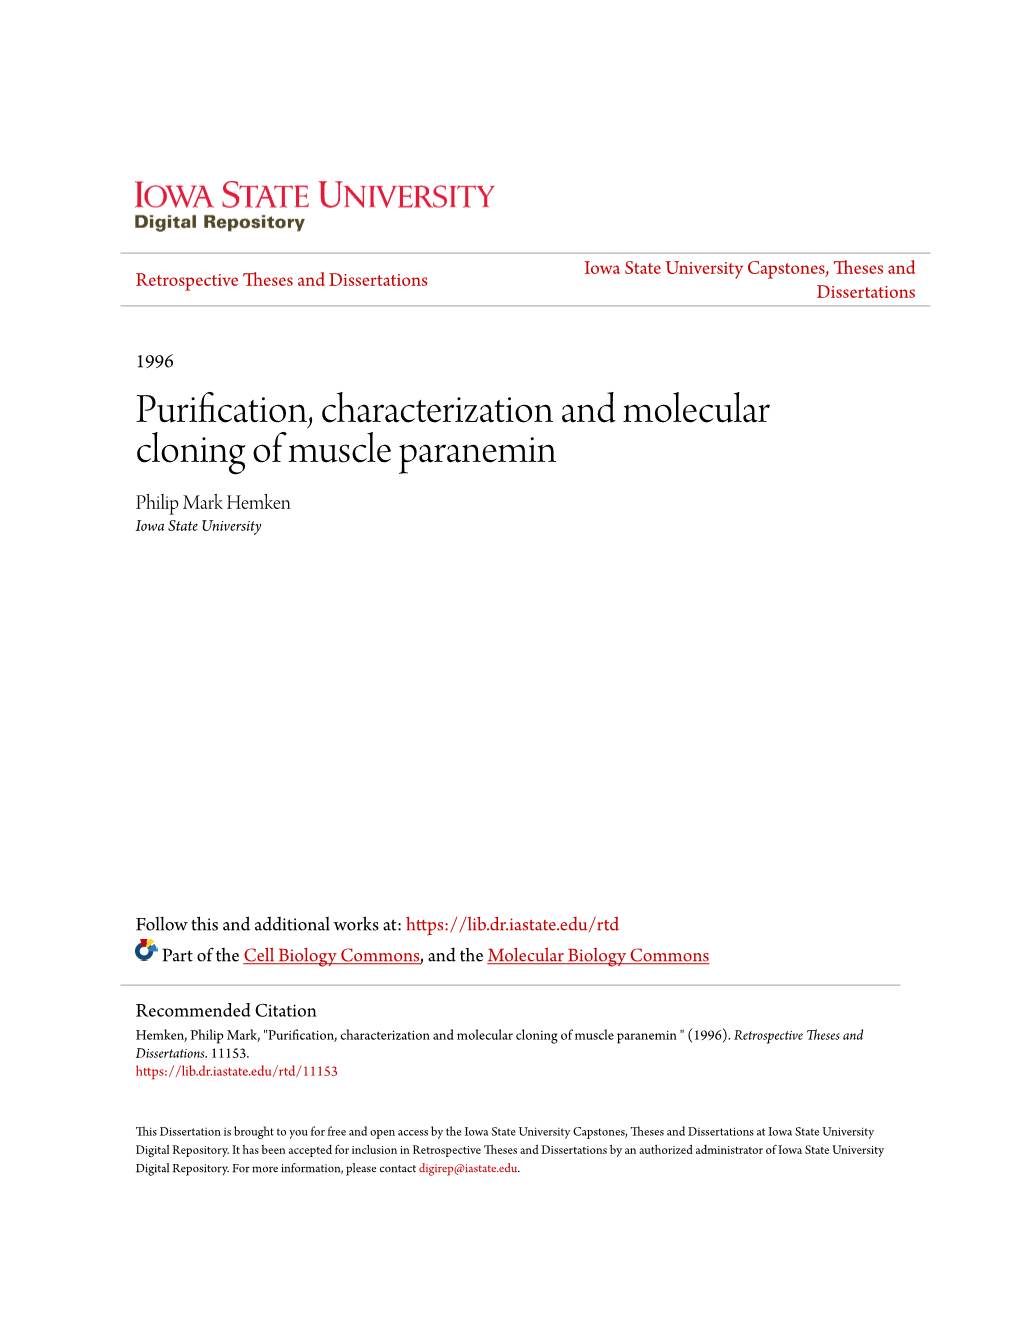 Purification, Characterization and Molecular Cloning of Muscle Paranemin Philip Mark Hemken Iowa State University